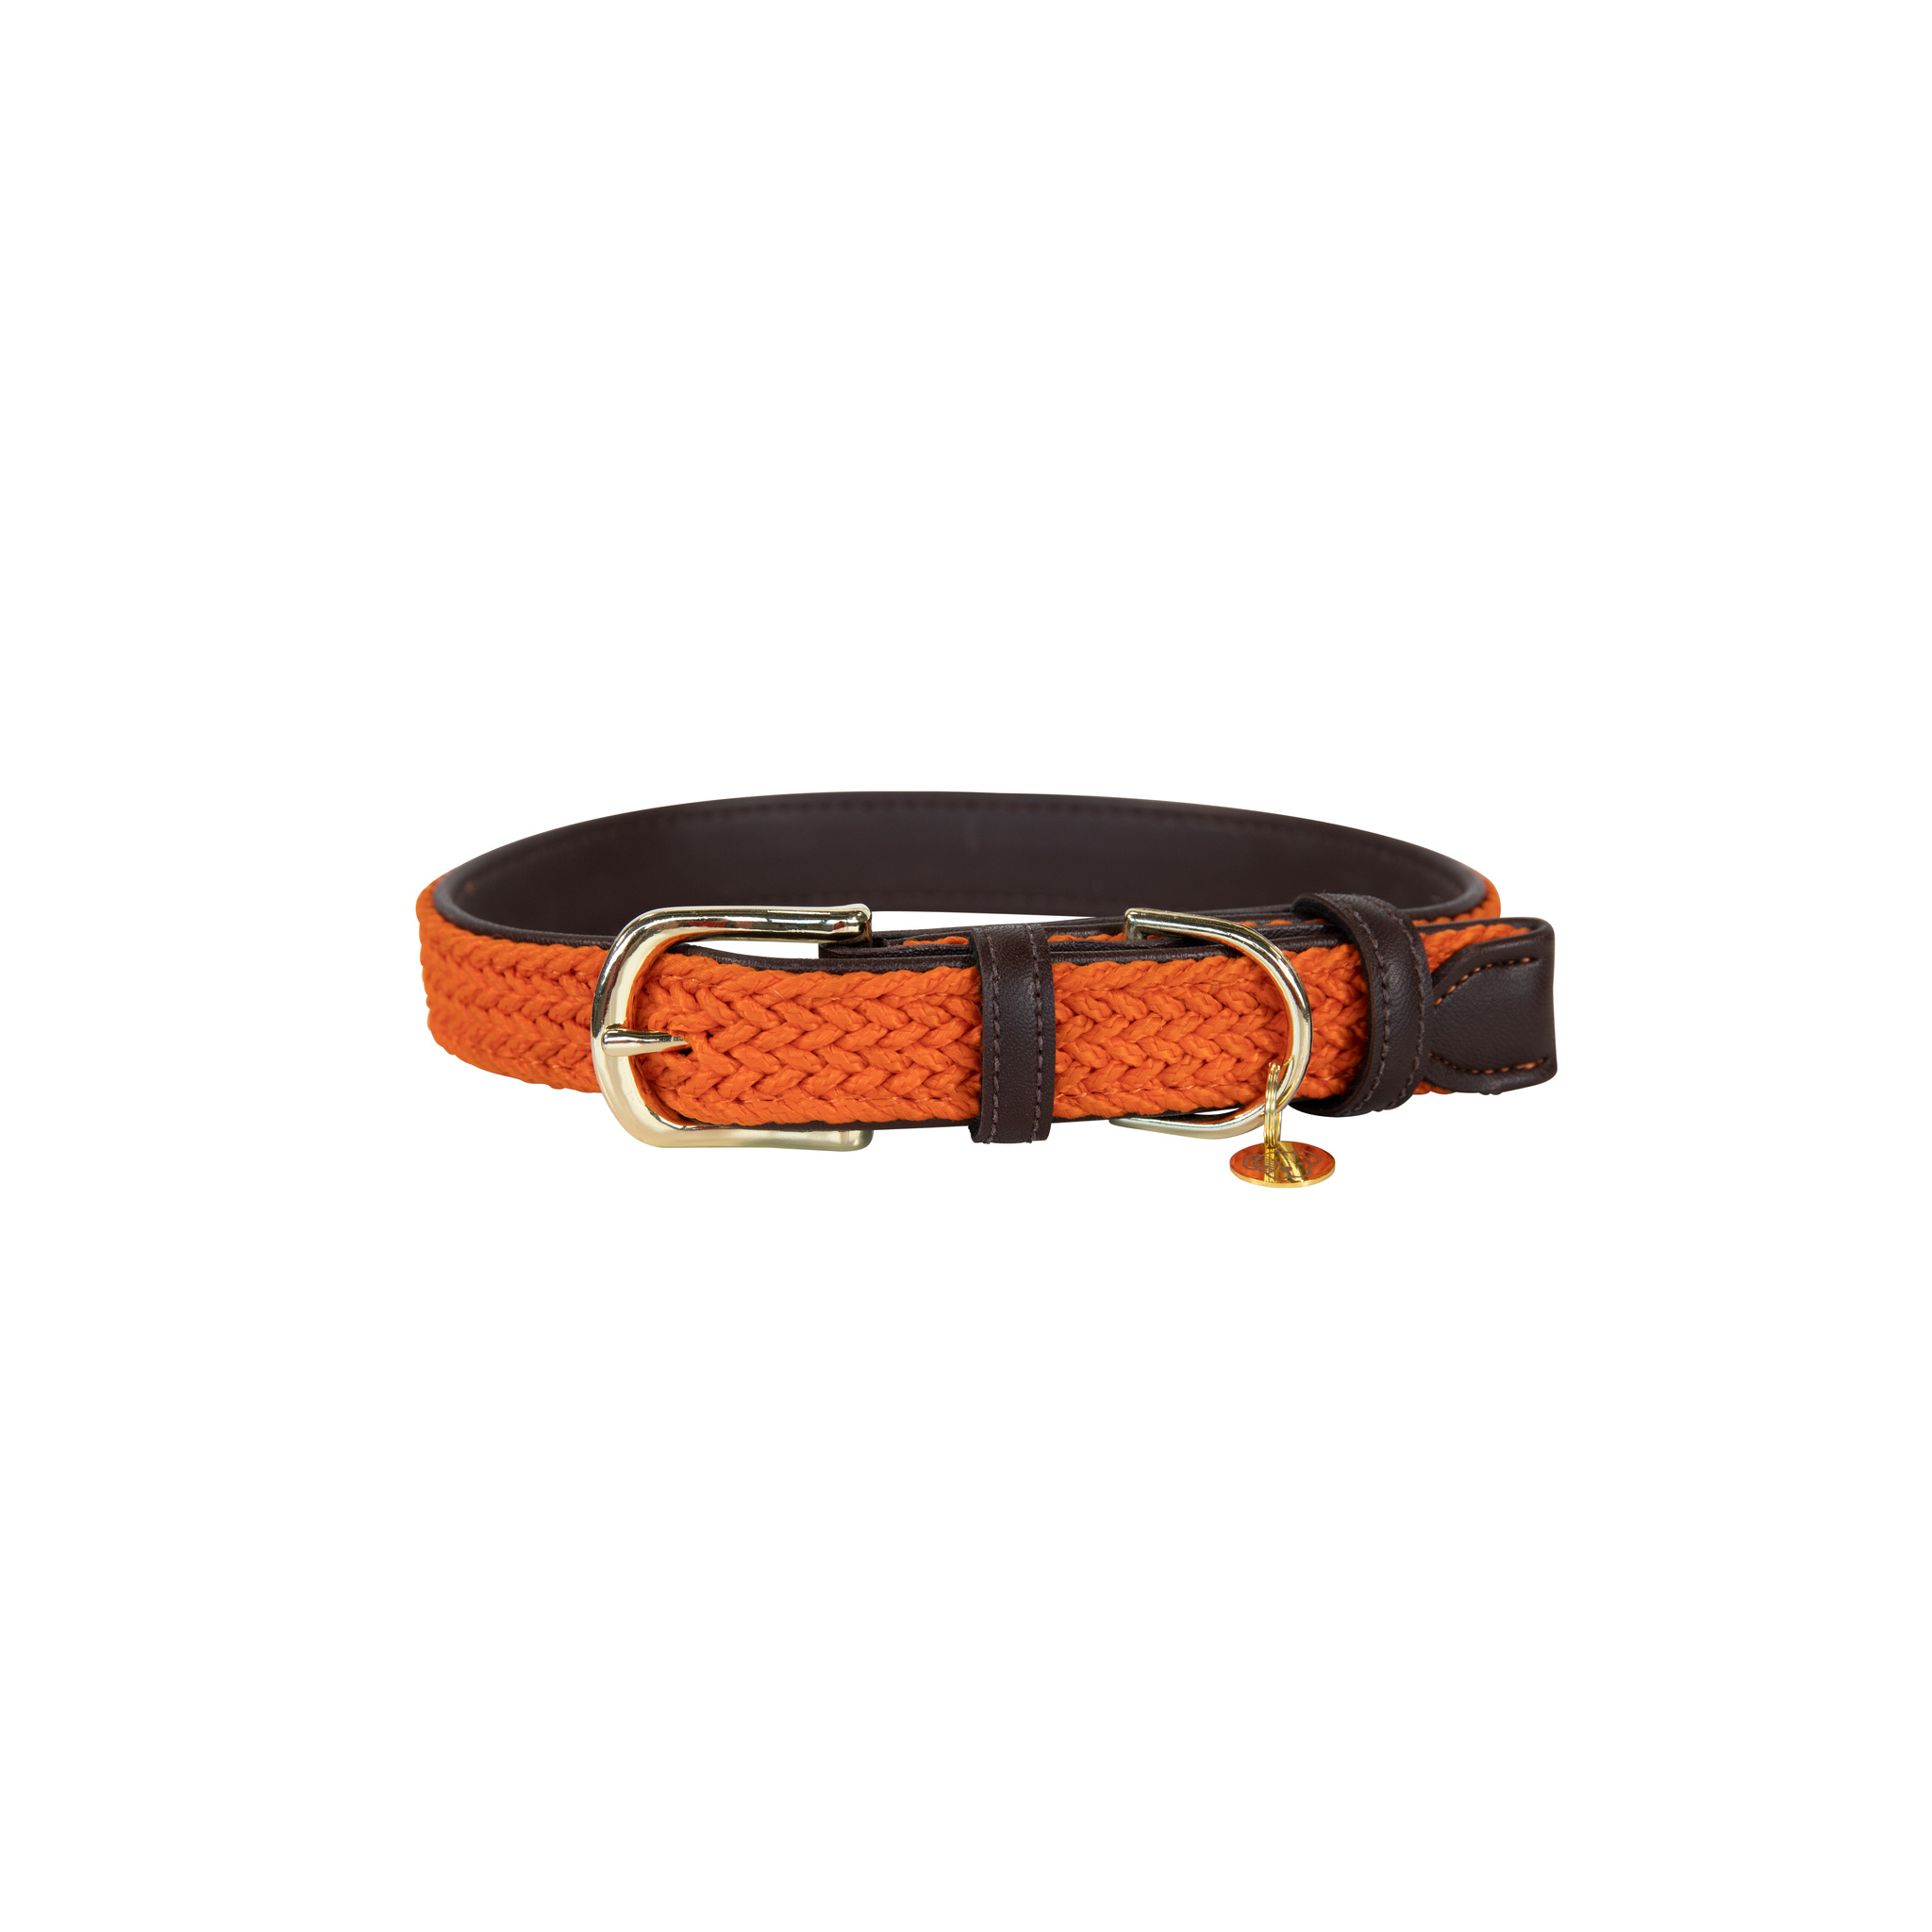 KENTUCKY Hundehalsband Nylon geflochten - orange - S - 8